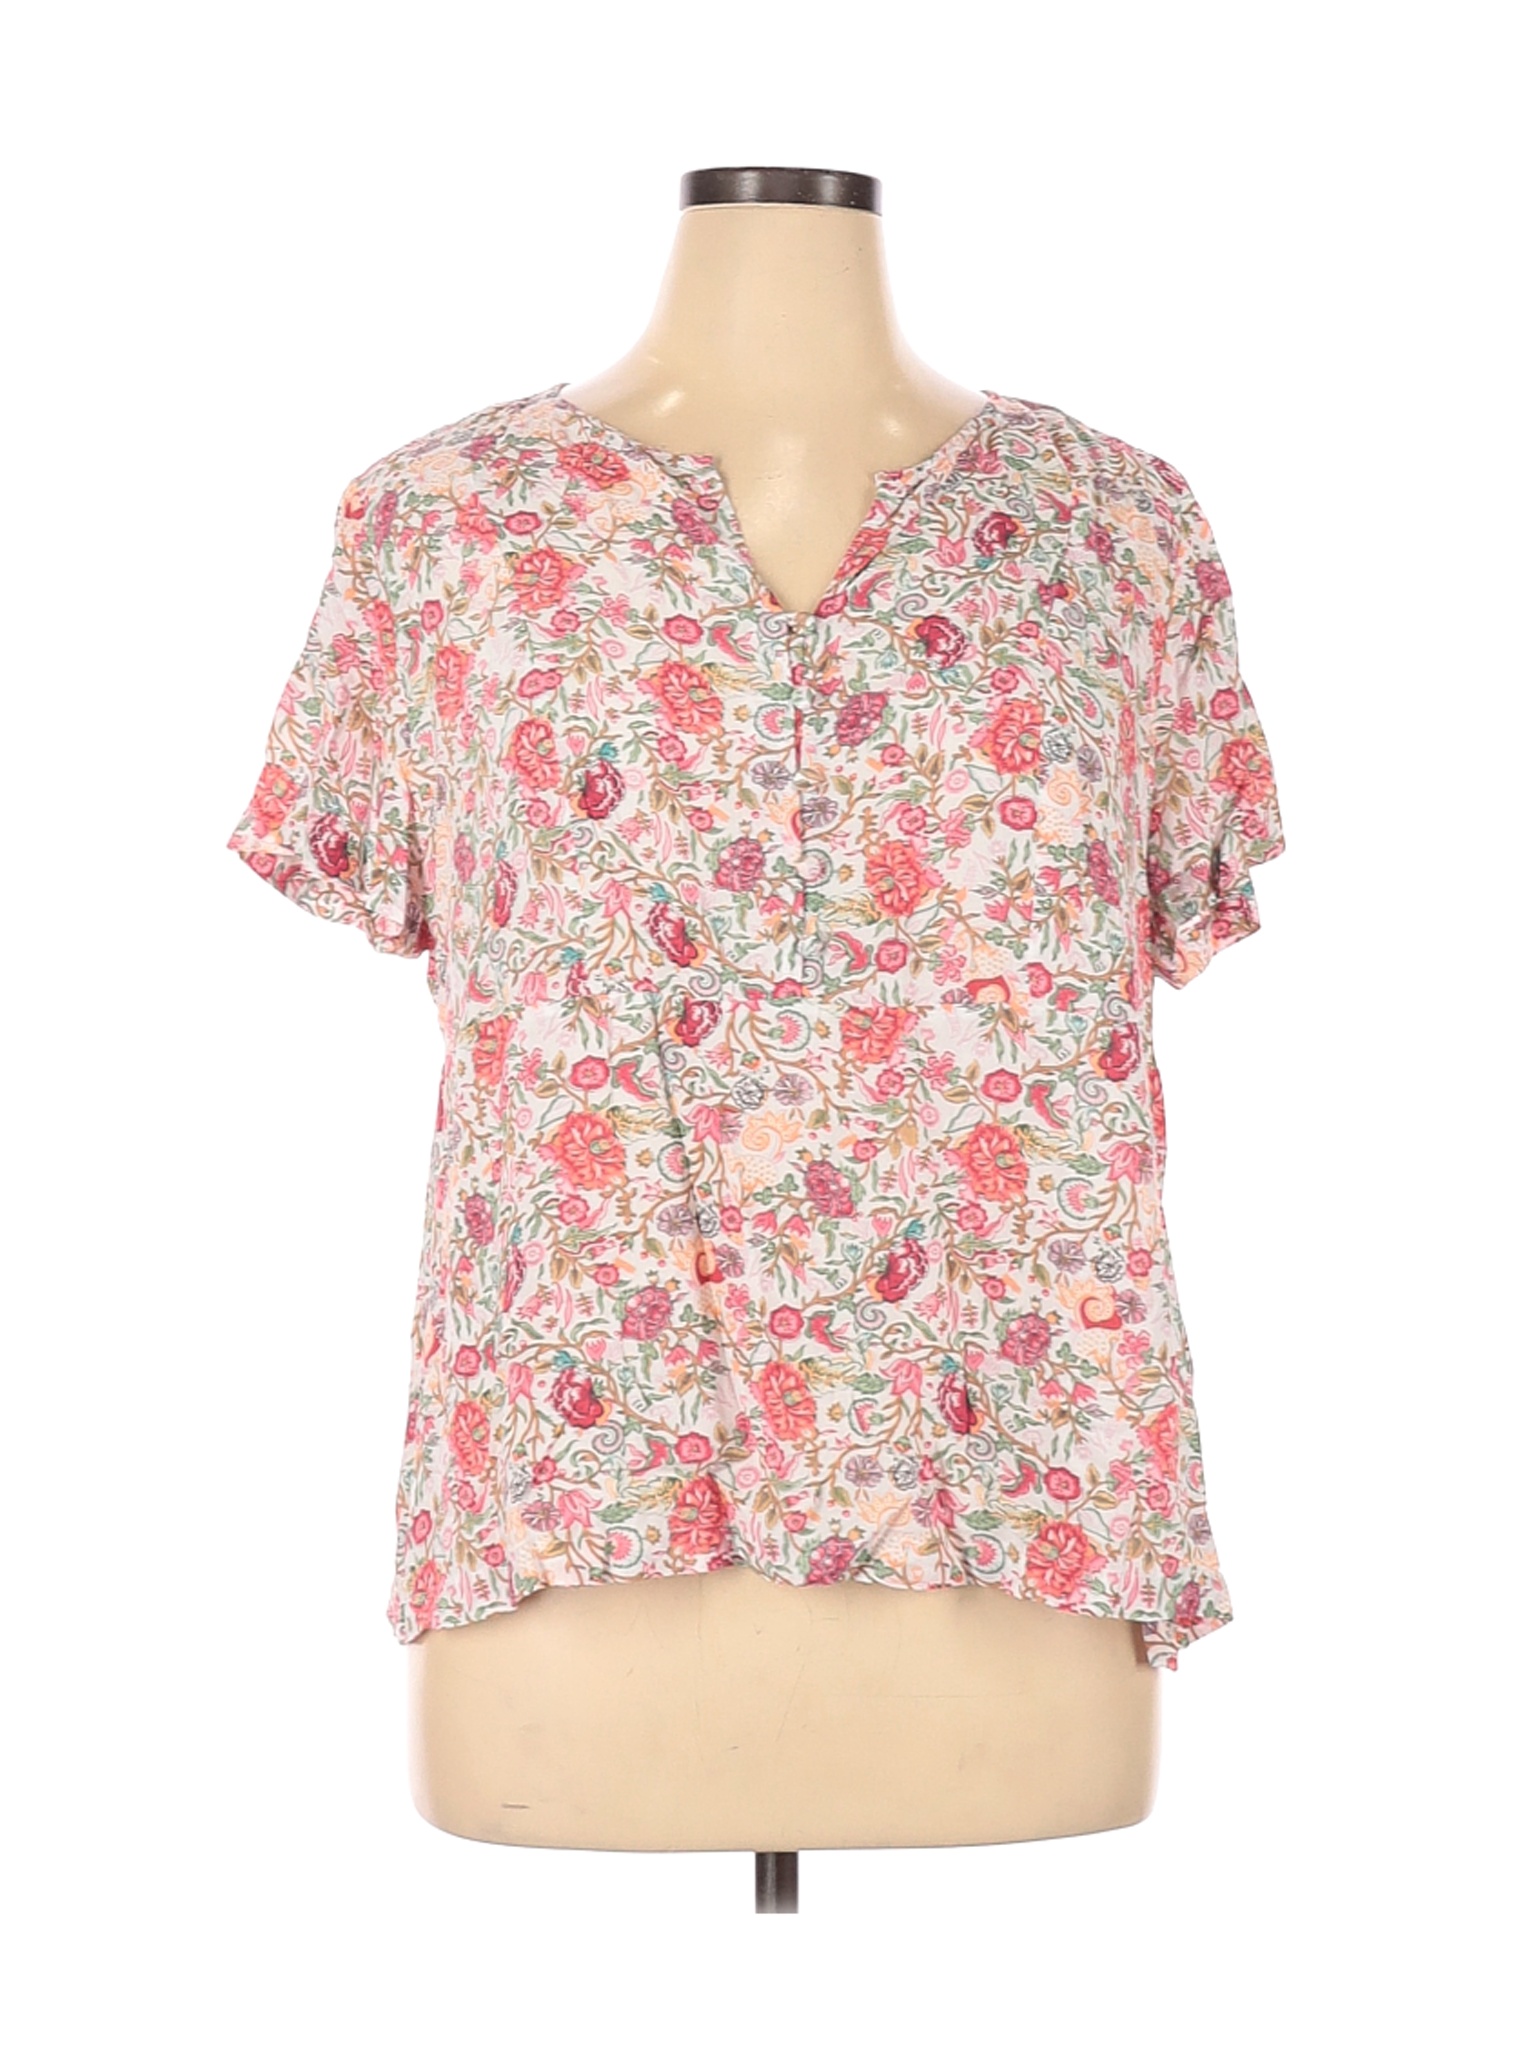 Adrienne Vittadini Women Pink Short Sleeve Blouse 1X Plus | eBay